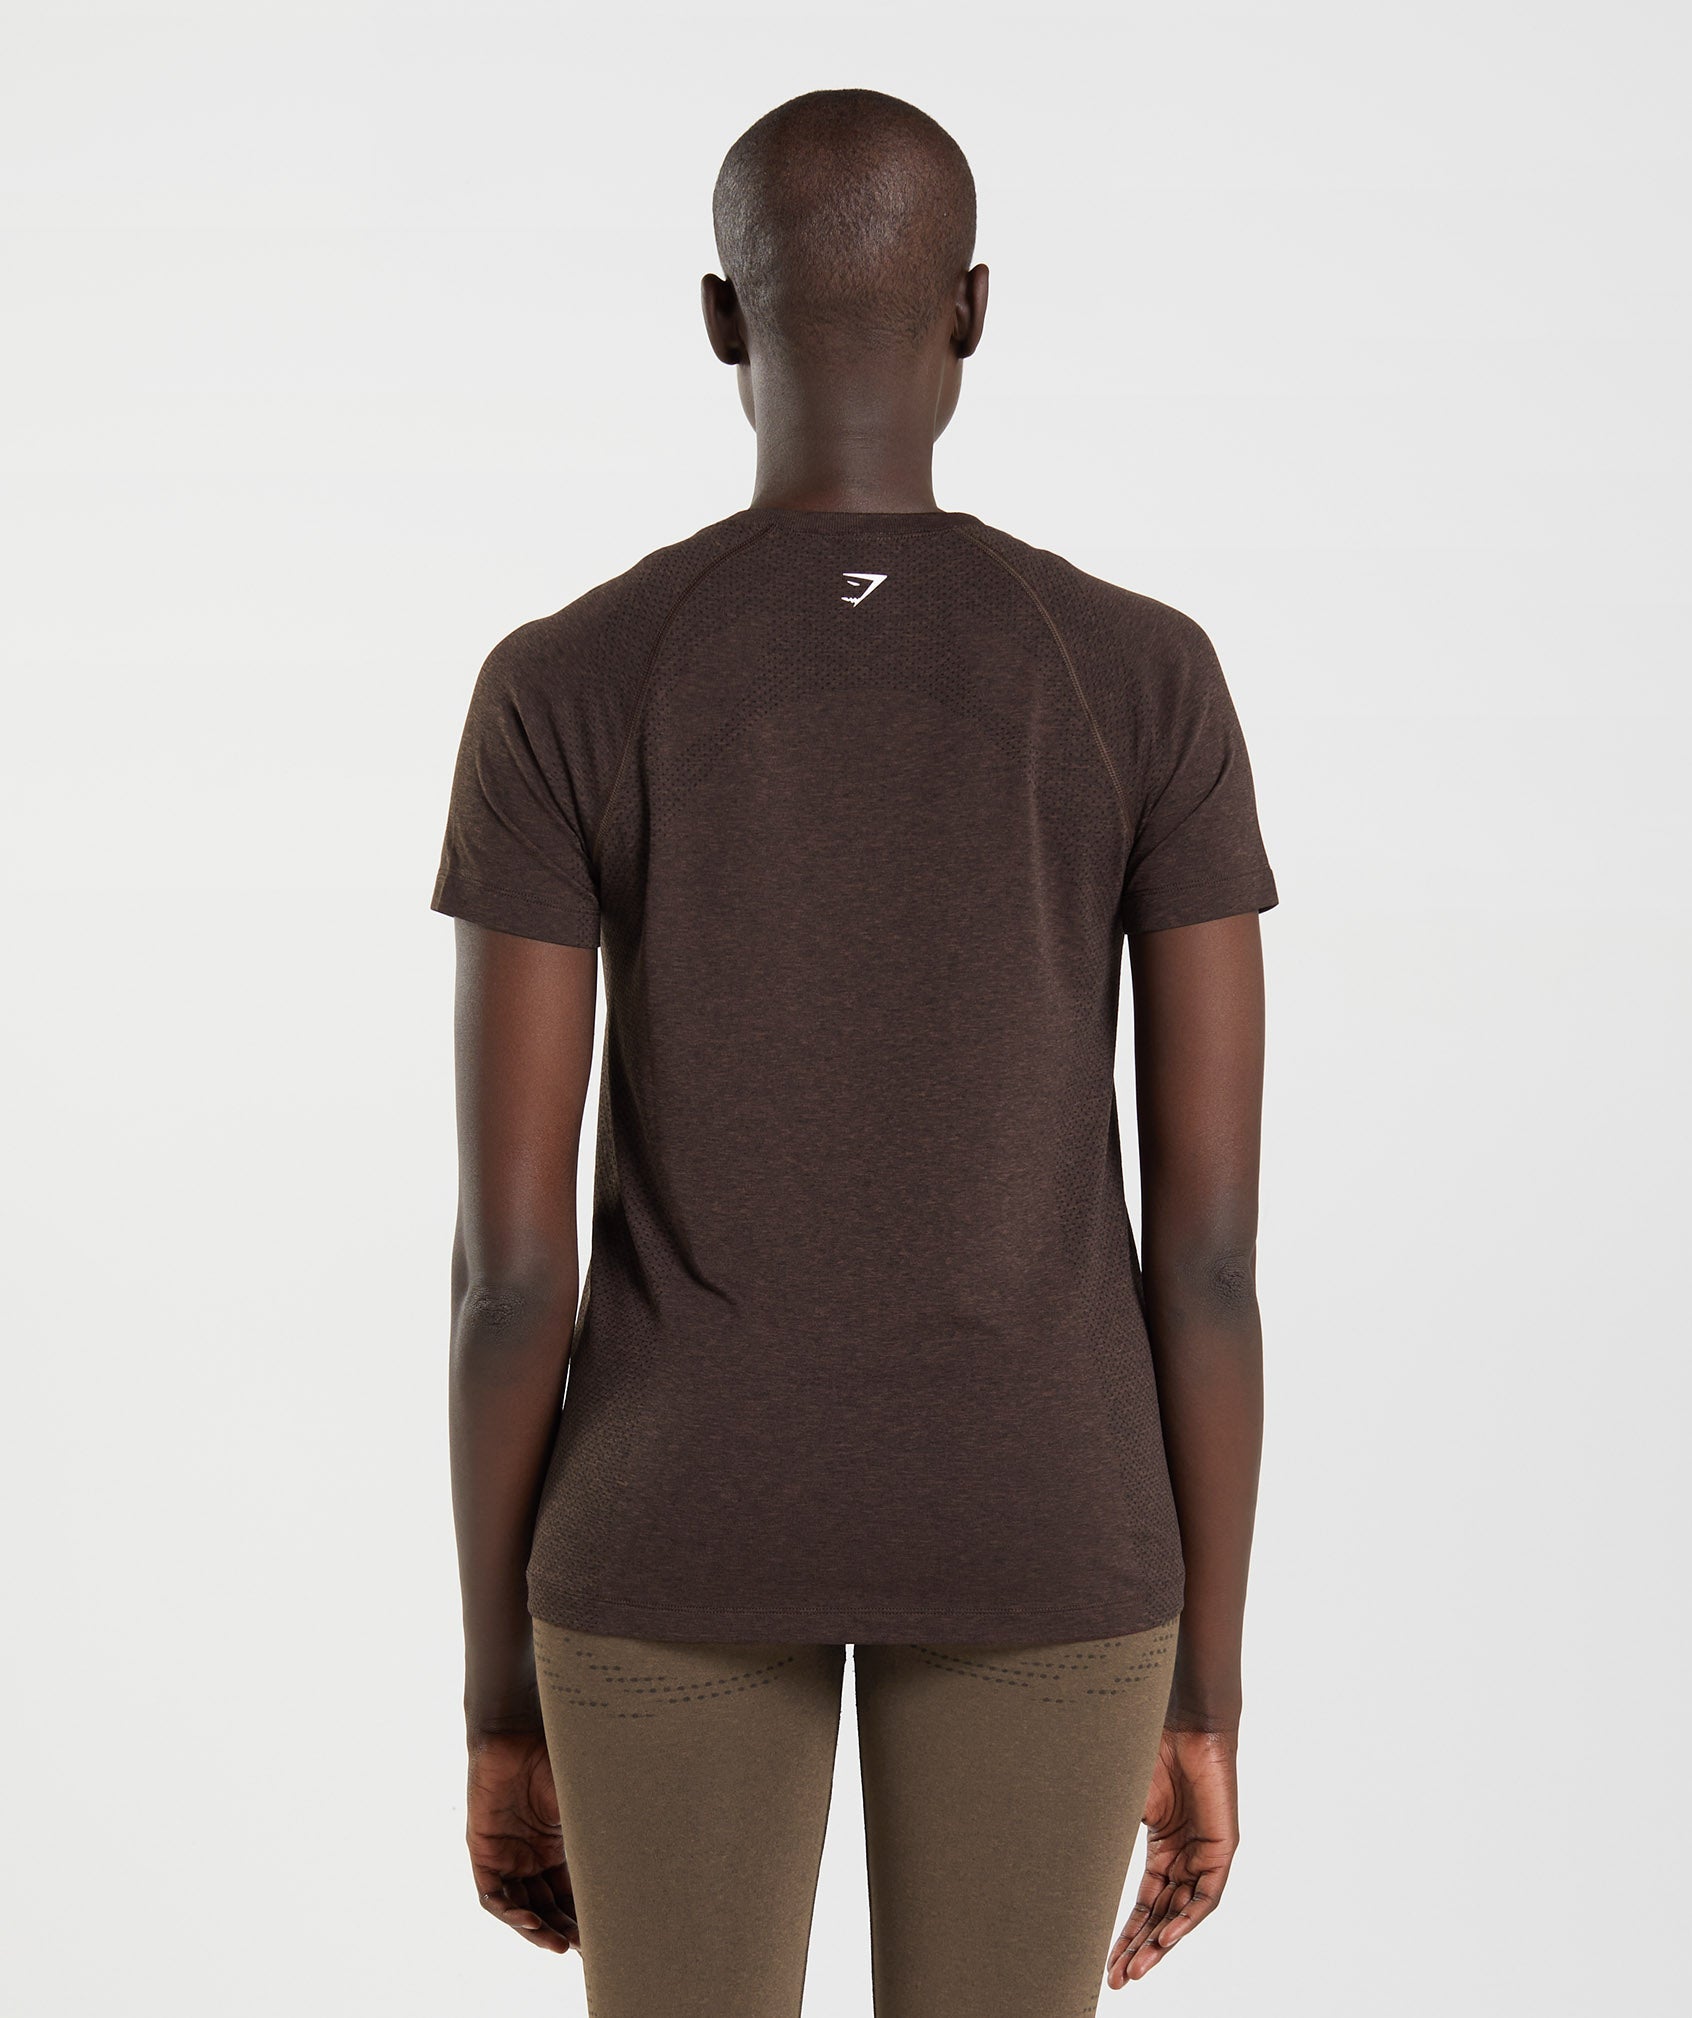 Vital Seamless 2.0 Light T-Shirt in Cherry Brown Marl